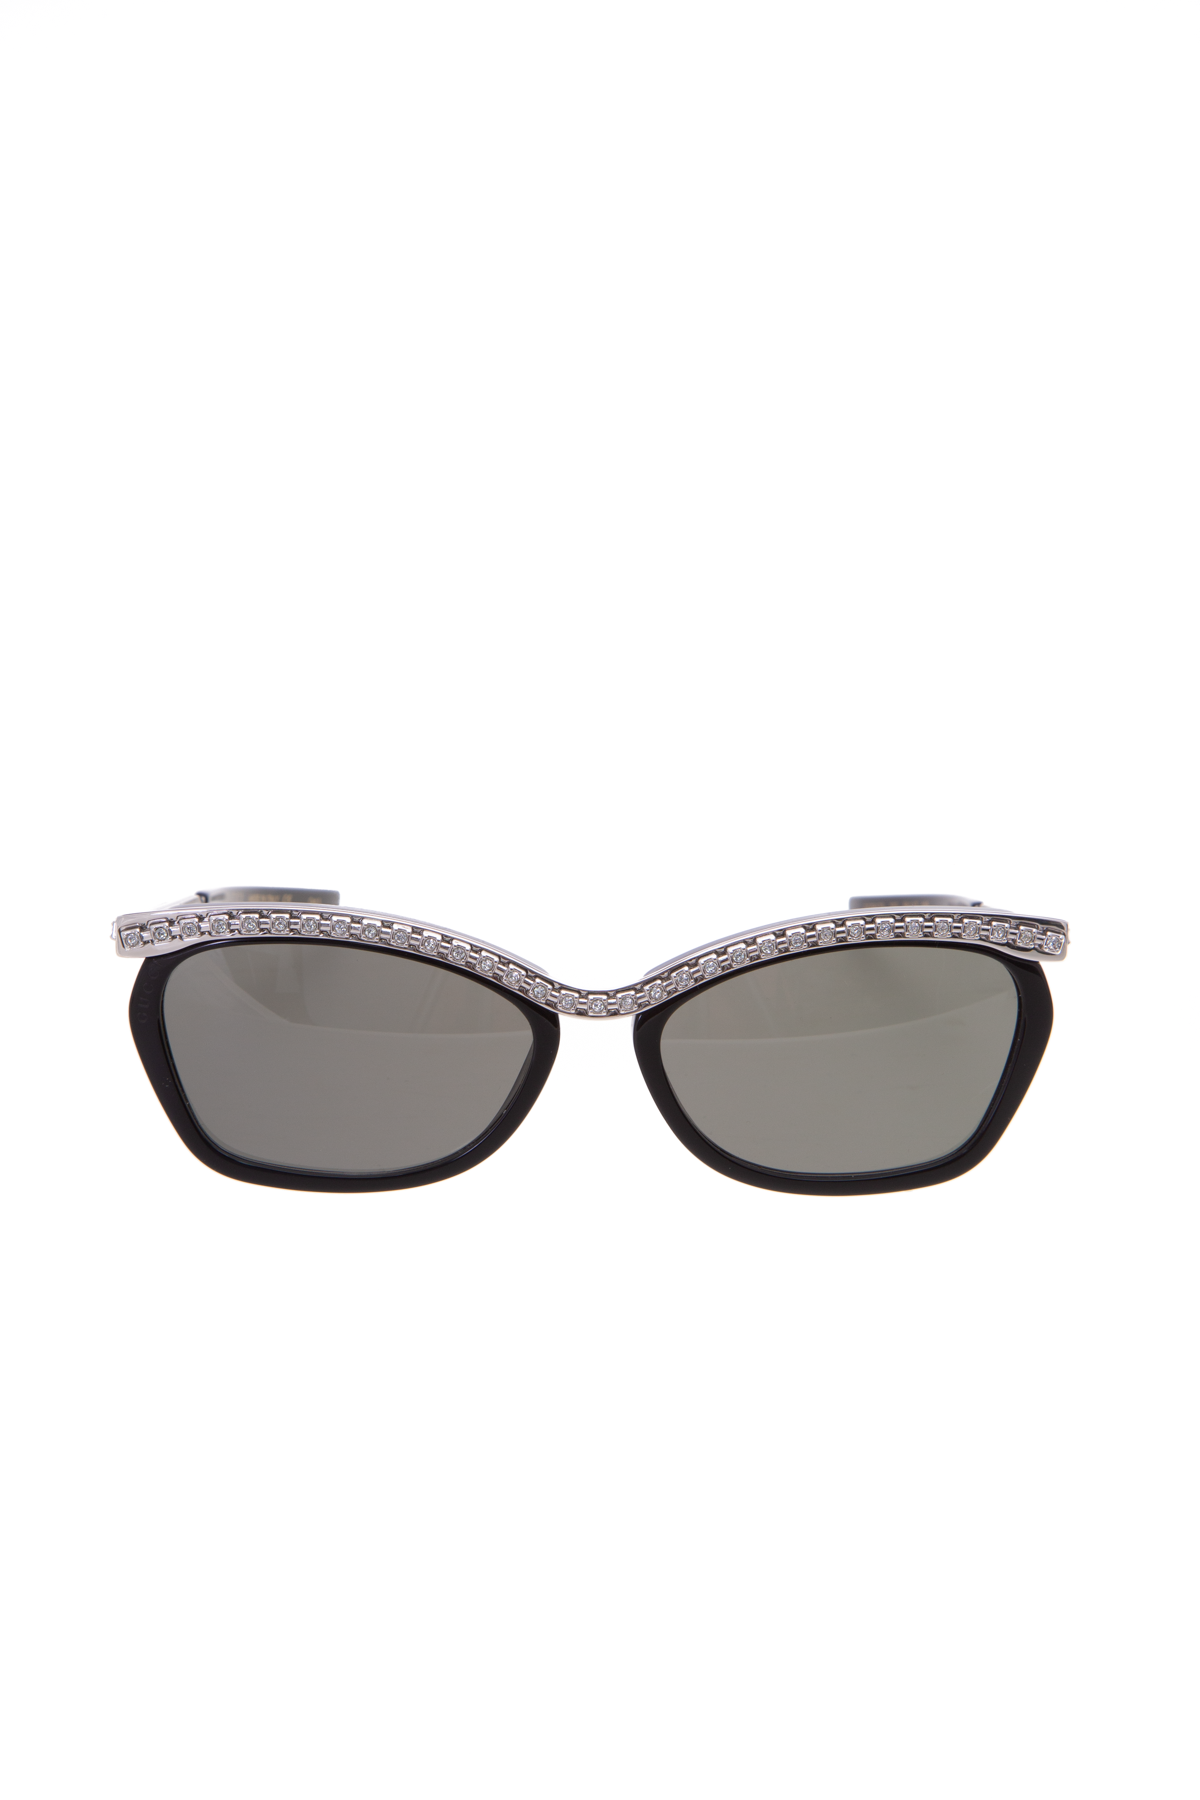 Gucci Crystal Embellished Sunglasses